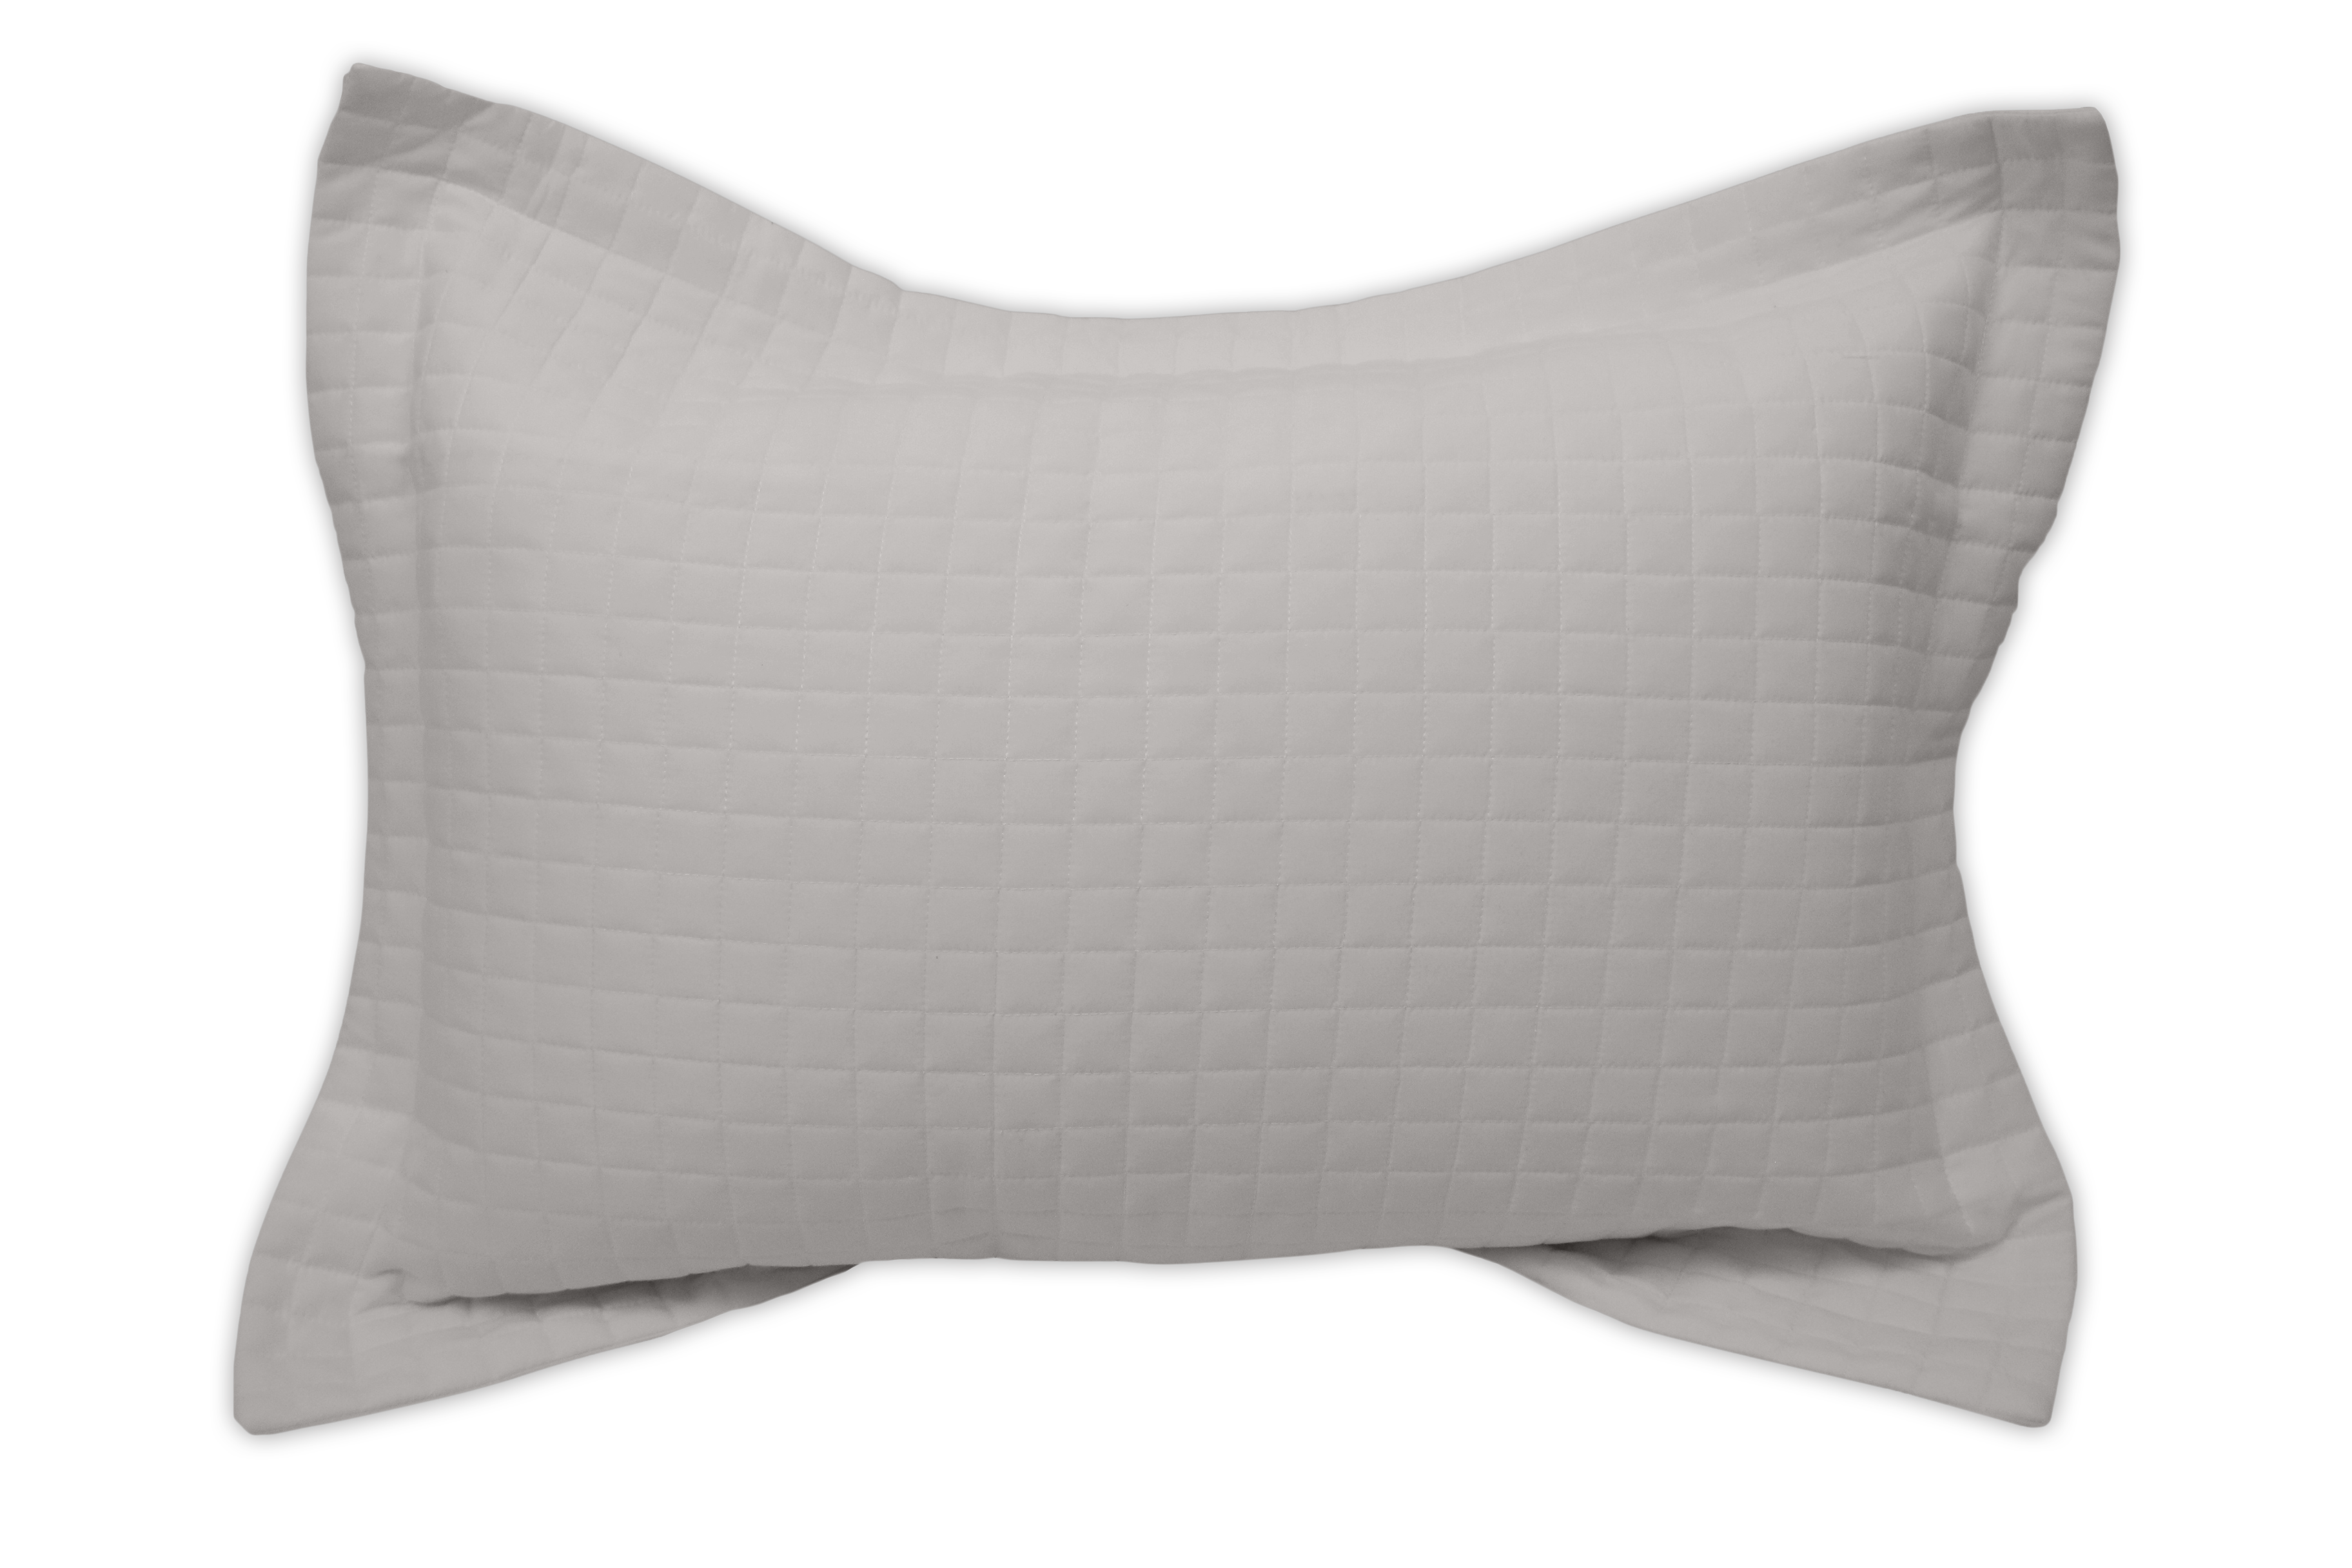 Soft Grey Pillow Sham